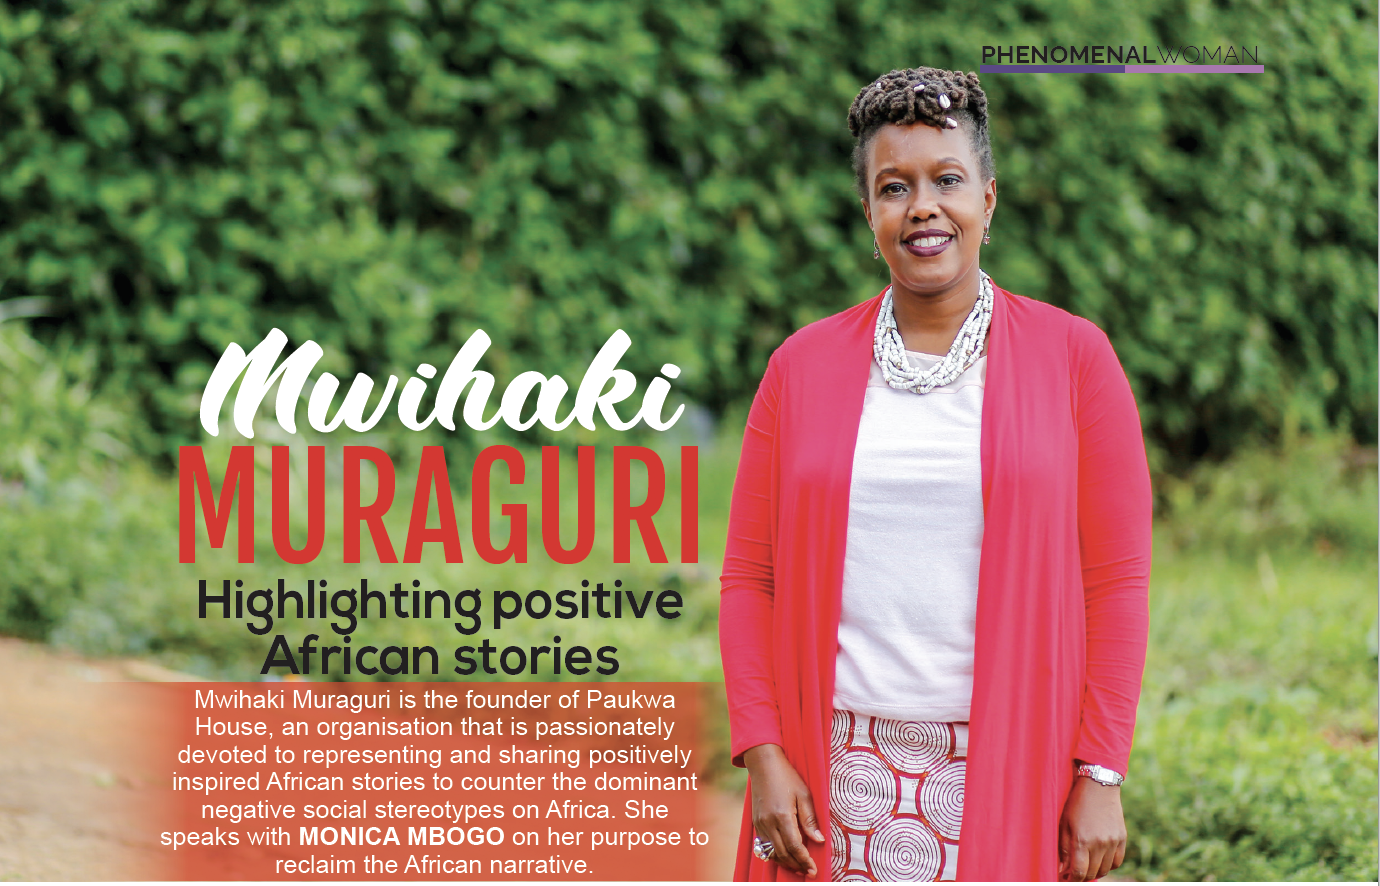 Mwihaki Muraguri: Highlighting positive African stories